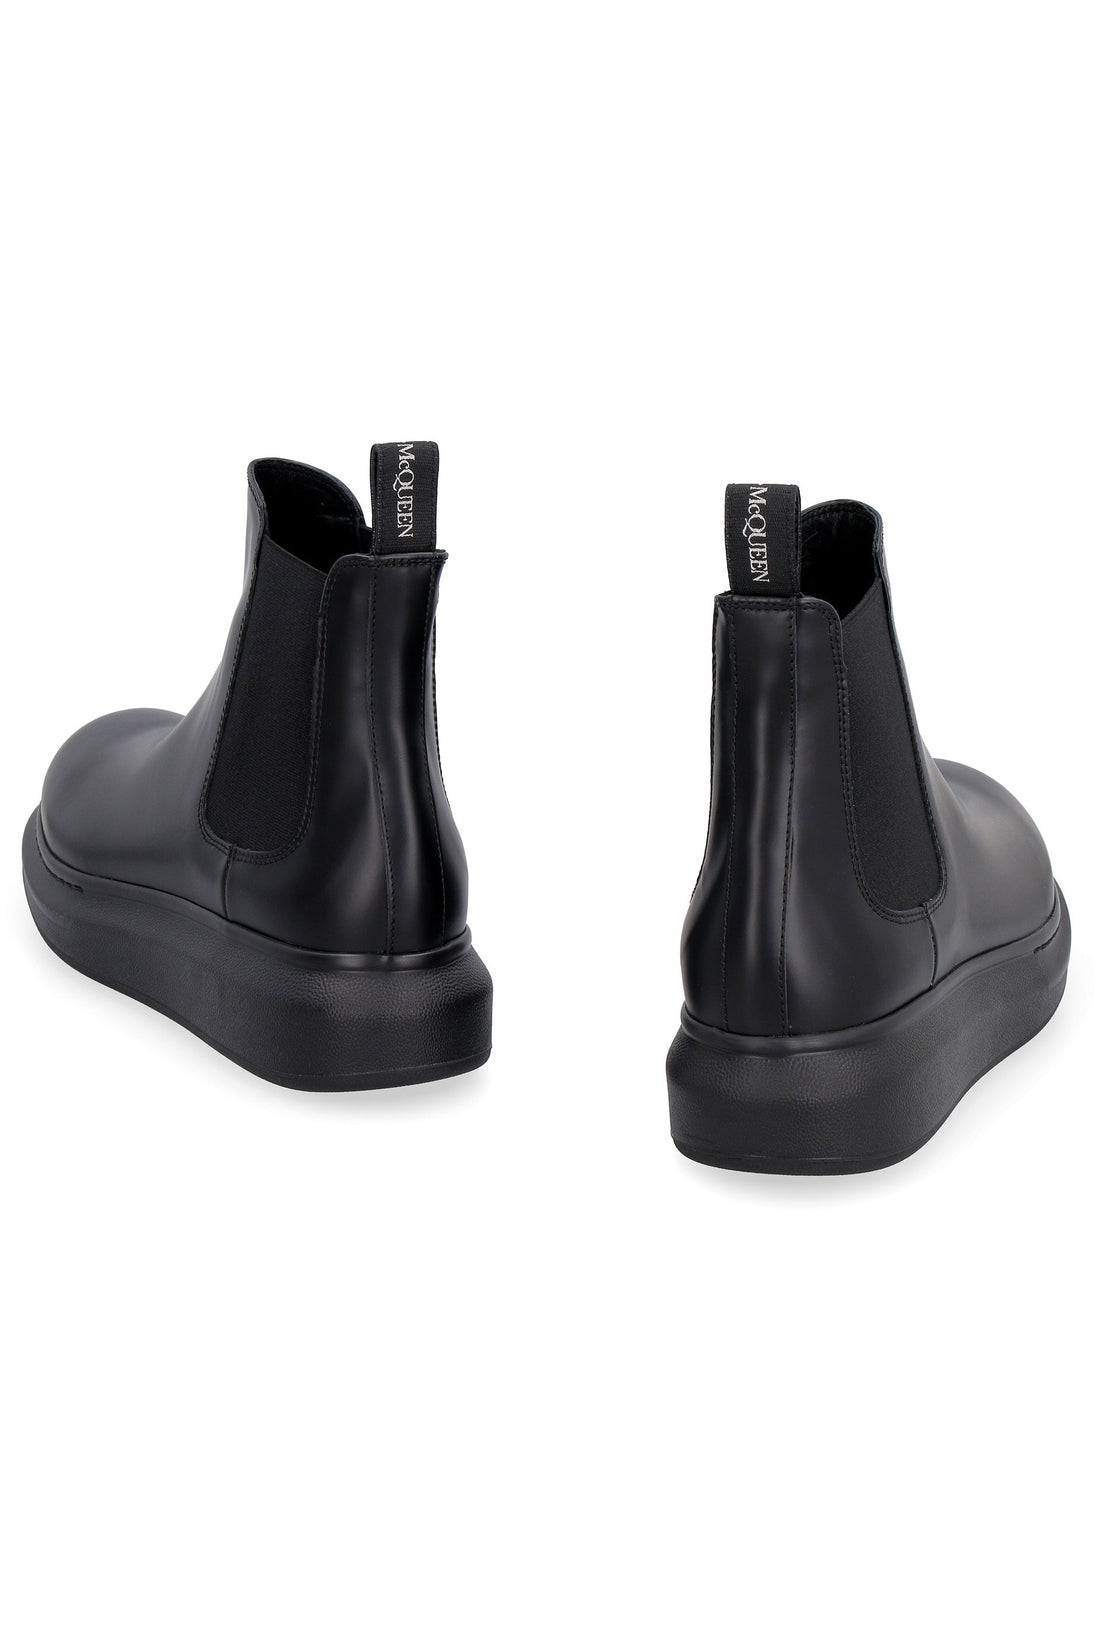 Alexander McQueen-OUTLET-SALE-Hybrid leather Chelsea boots-ARCHIVIST